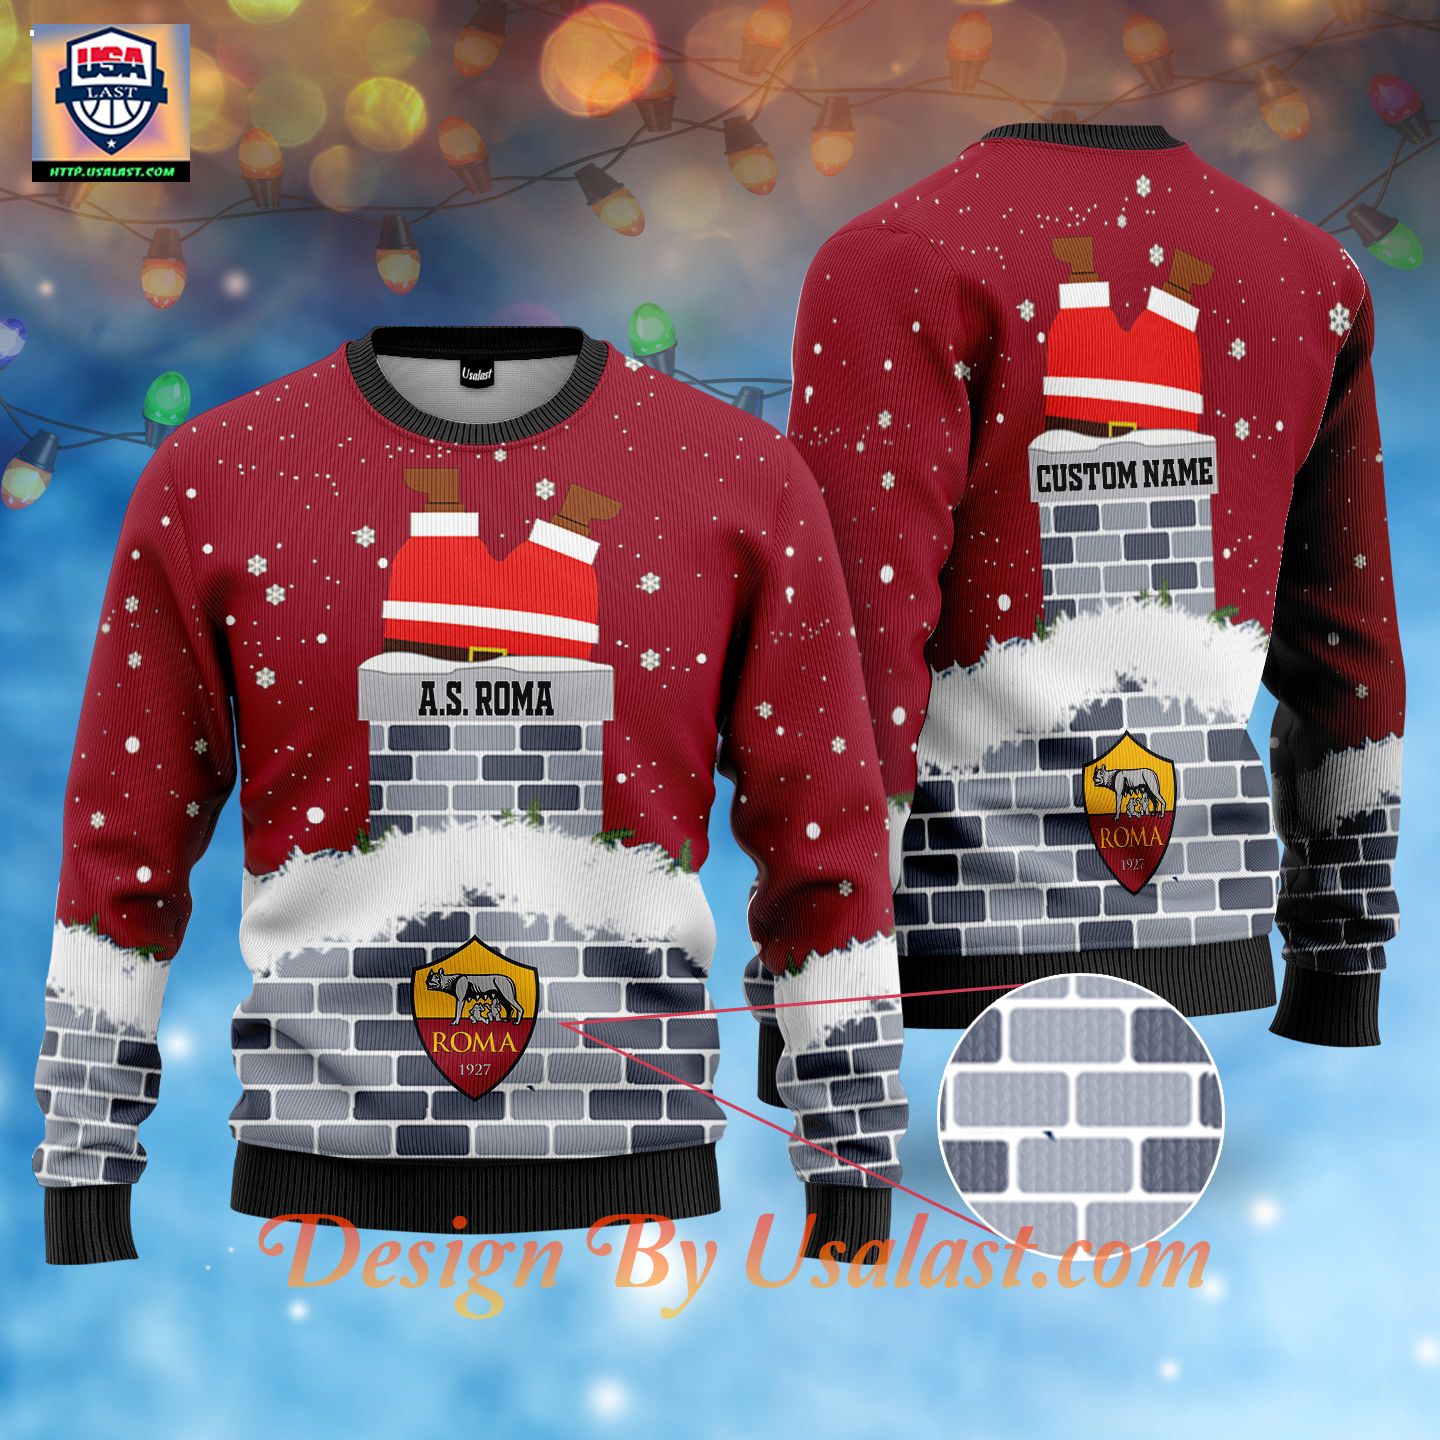 Amazon A.S. Roma Santa Claus Custom Name Ugly Christmas Sweater